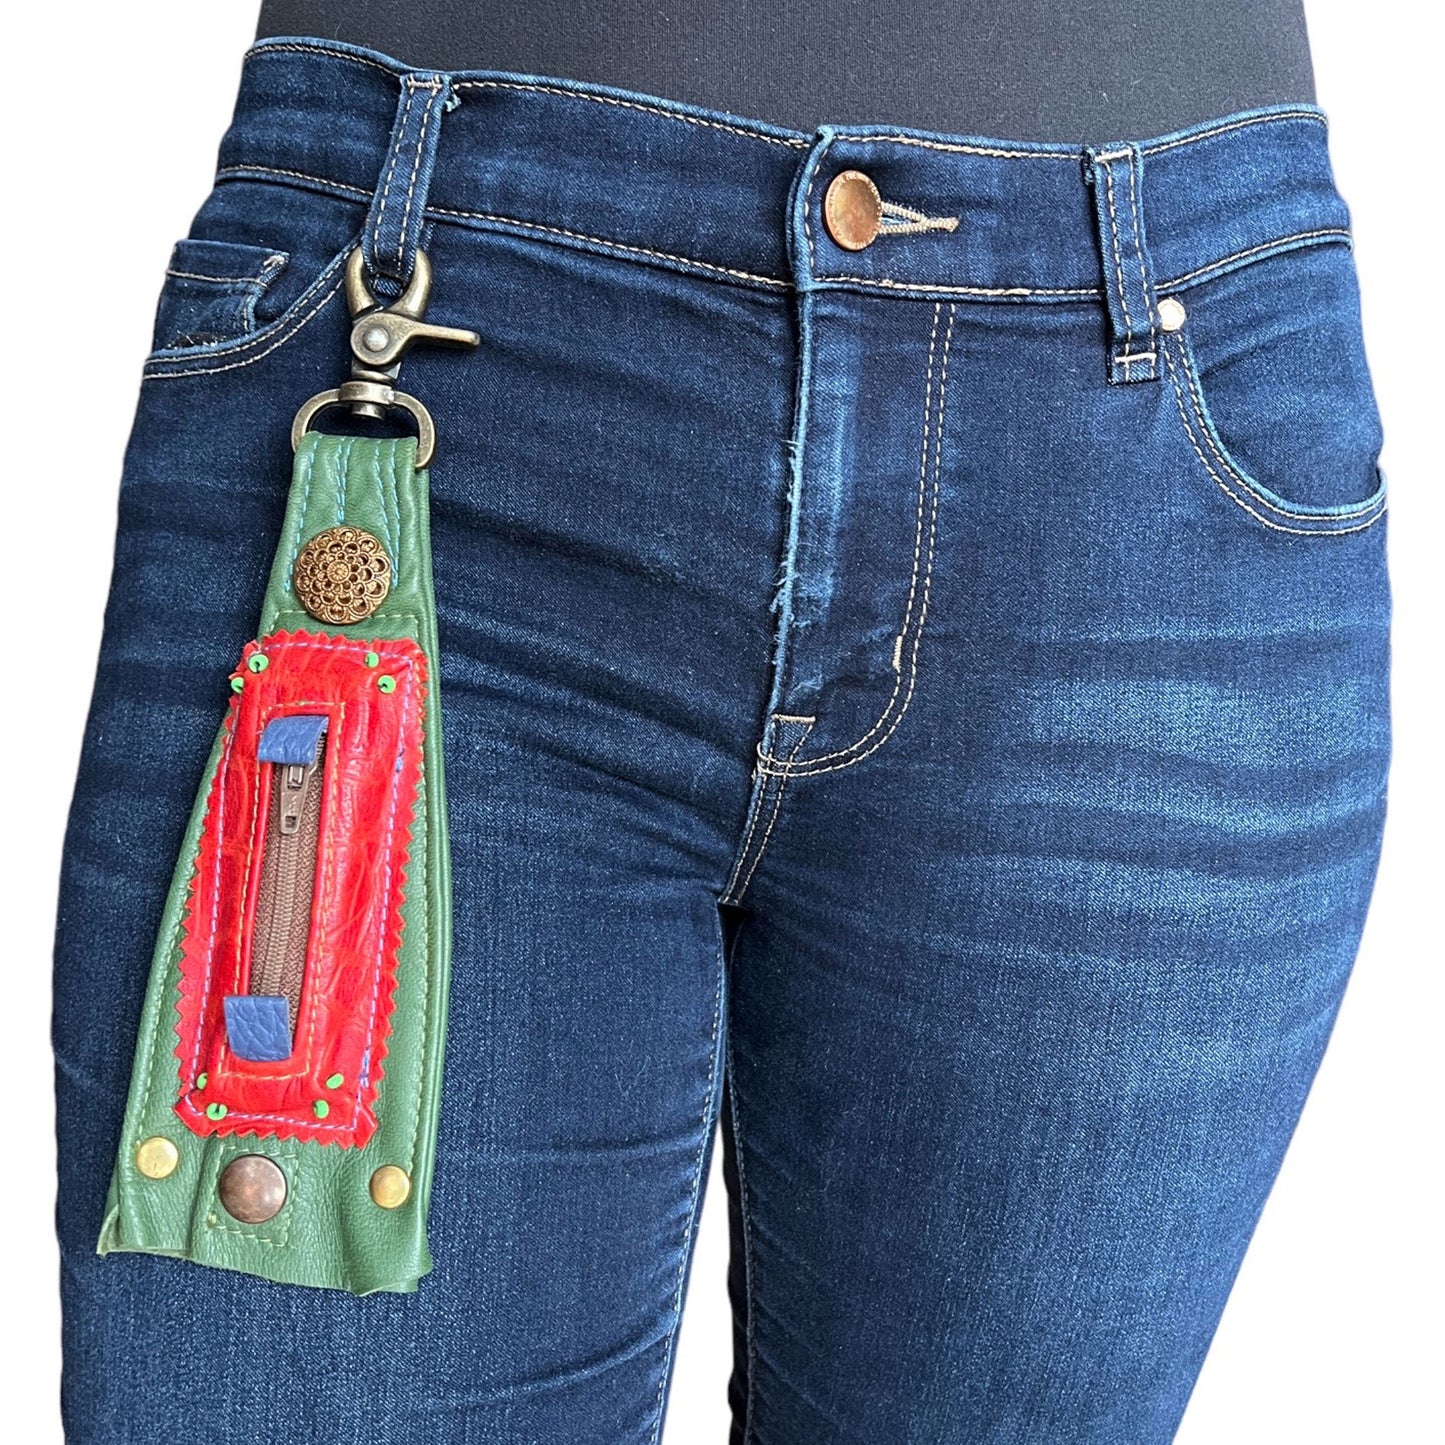 Zephr Talisman Leather Spring Hook Pocket Attachable ZE01 Green